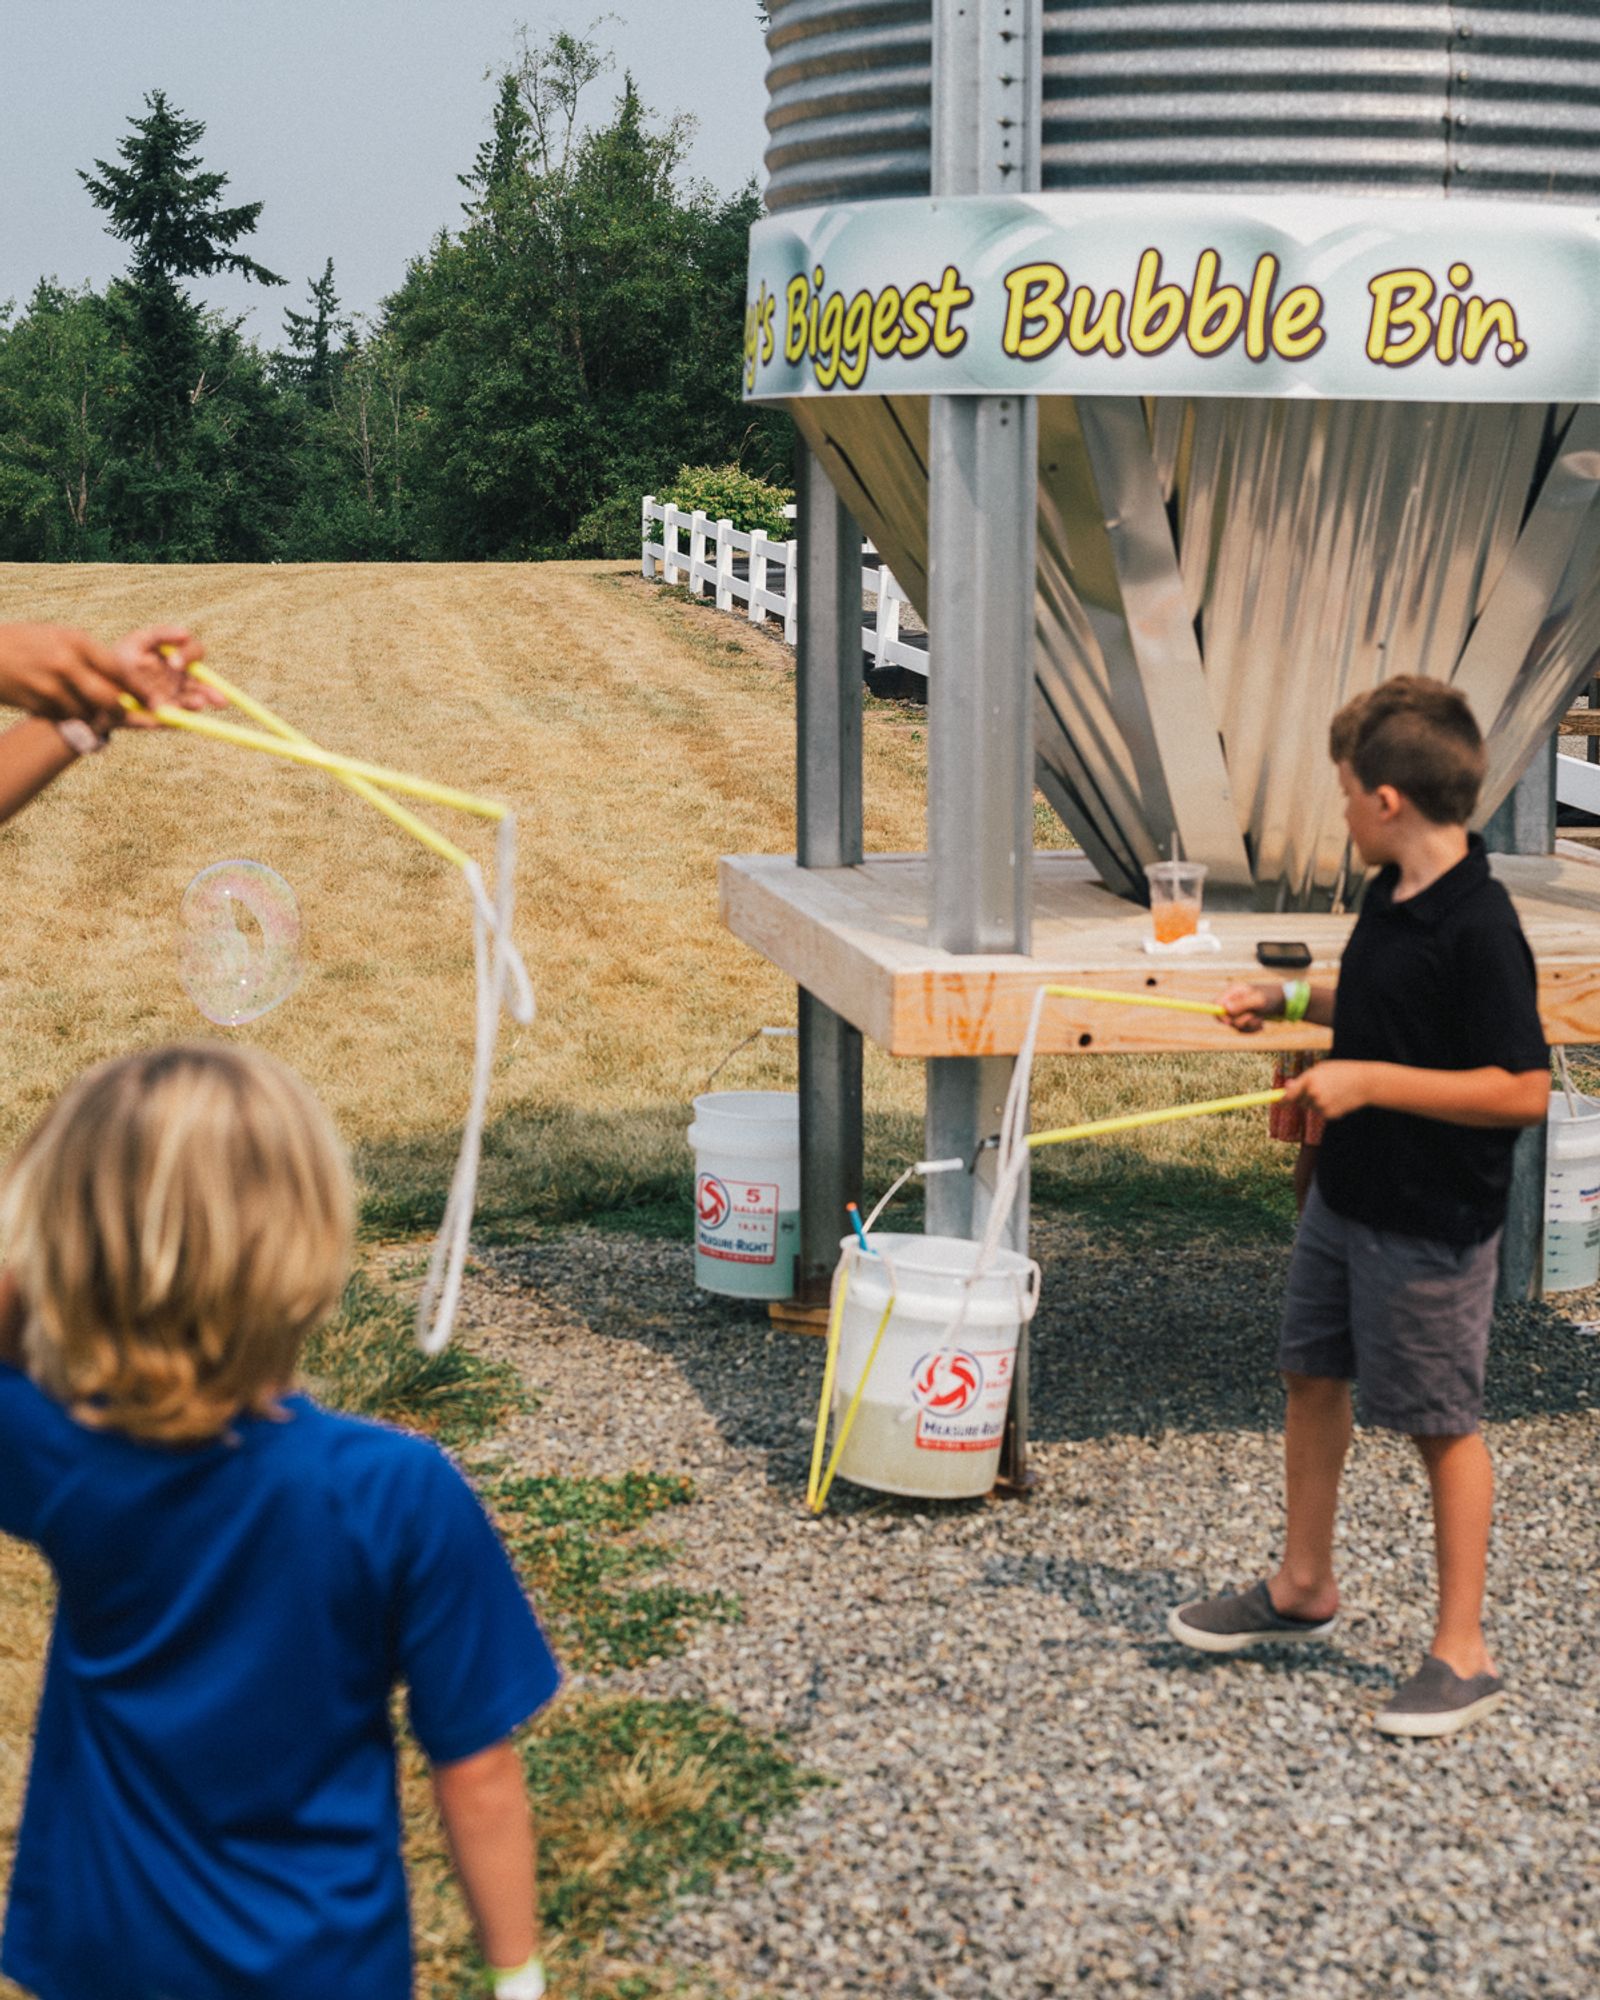 © Alana Celii - The biggest bubble bin at the Maris Farm Sunflower Days Festival in Buckley, WA.